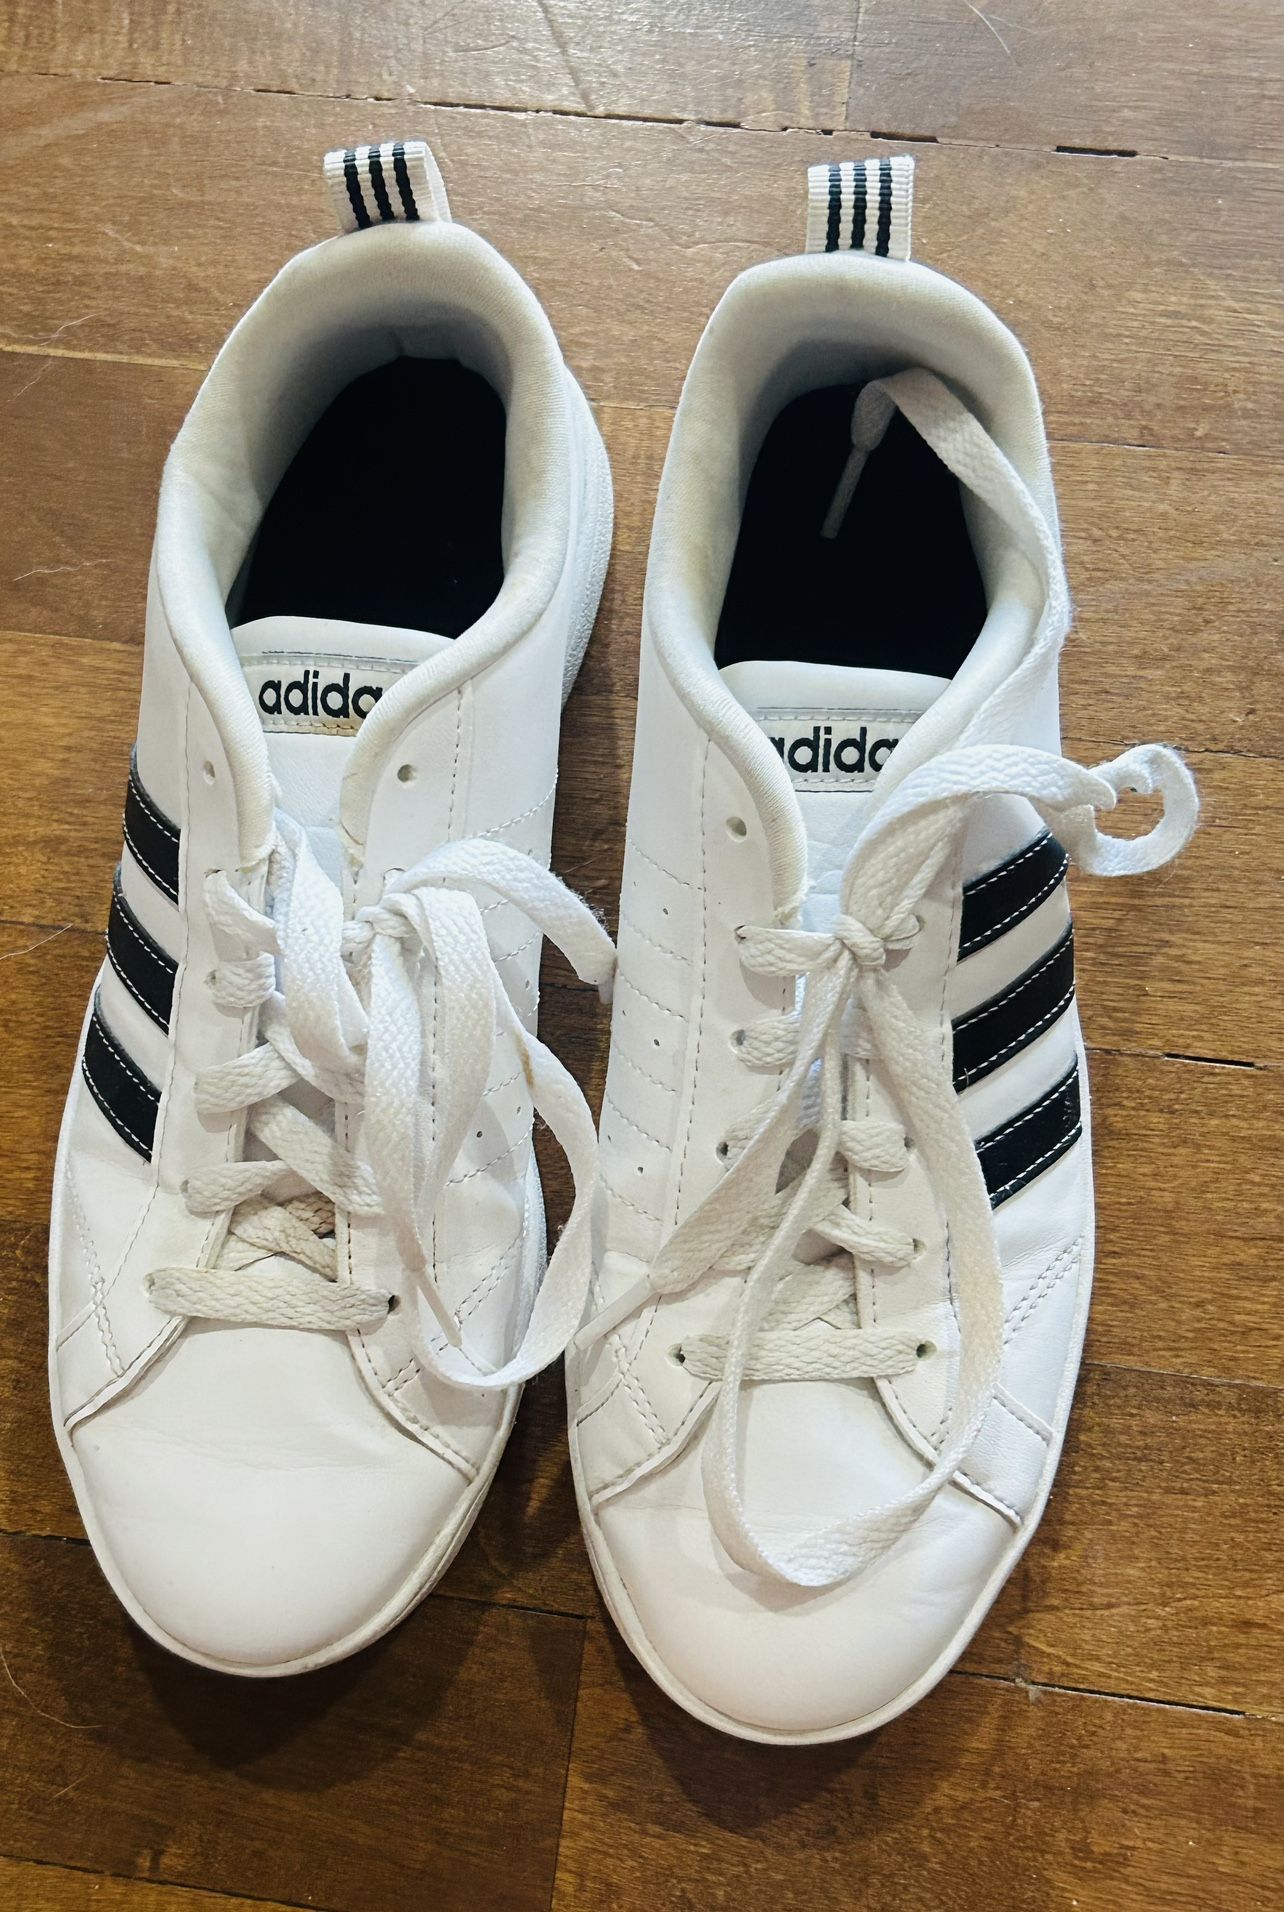 Adidas Neo Baseline Women's Tennis Shoes White Black Size 6